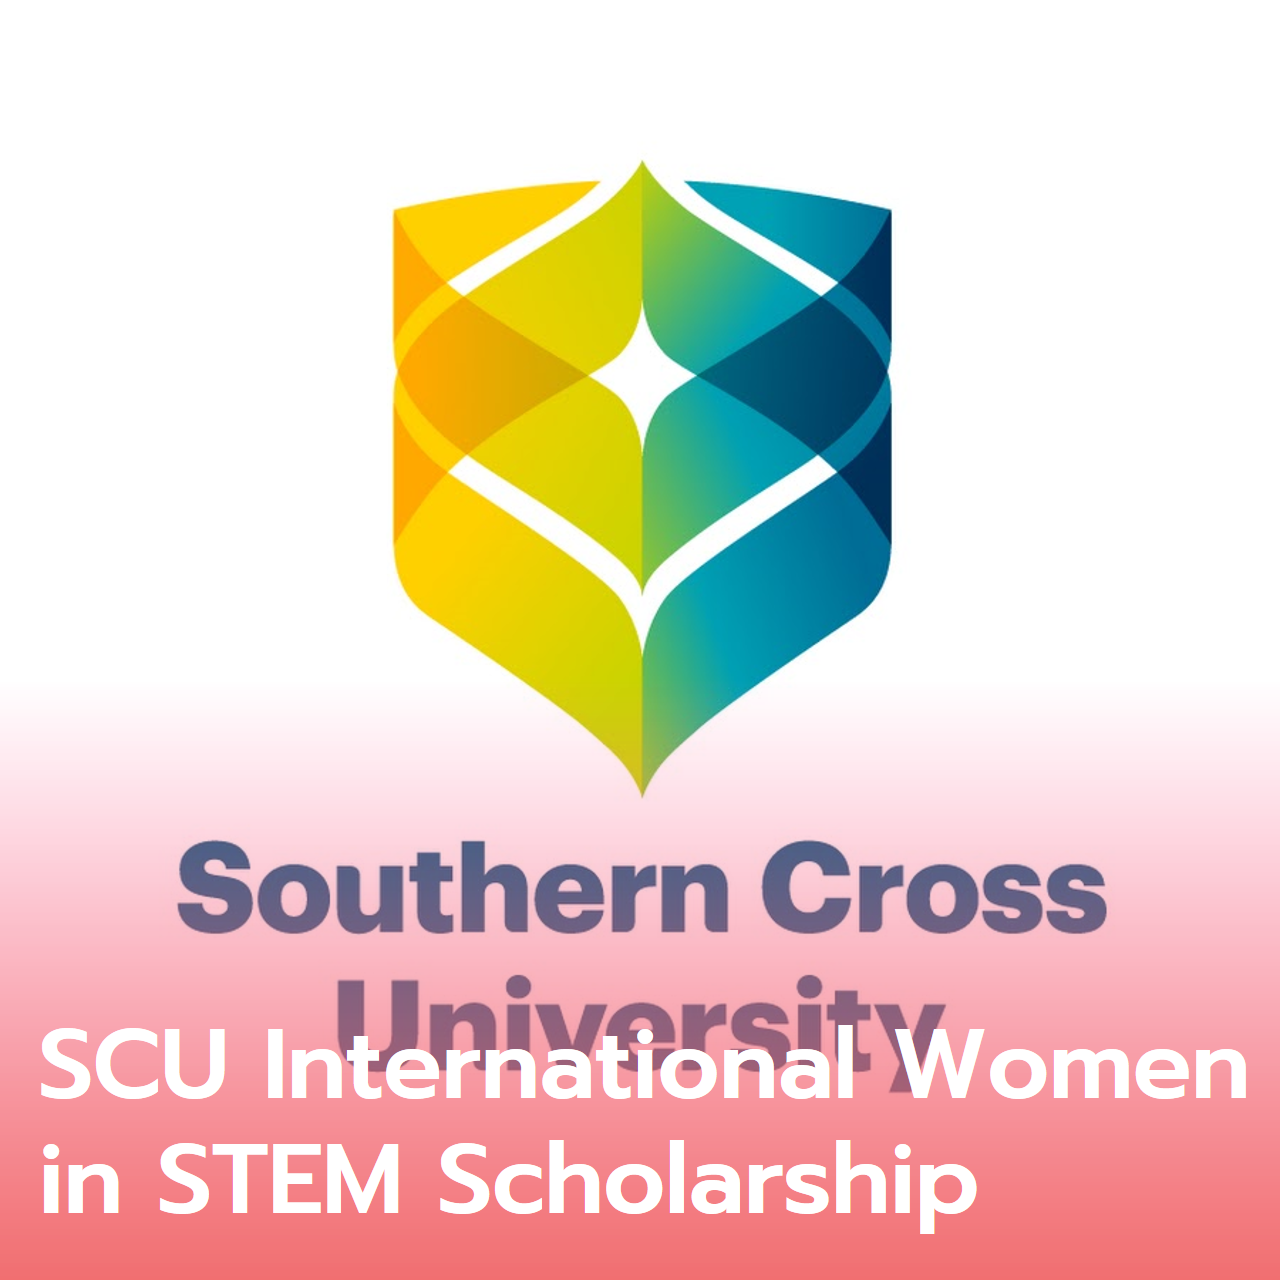  SCU International Women in STEM Scholarship